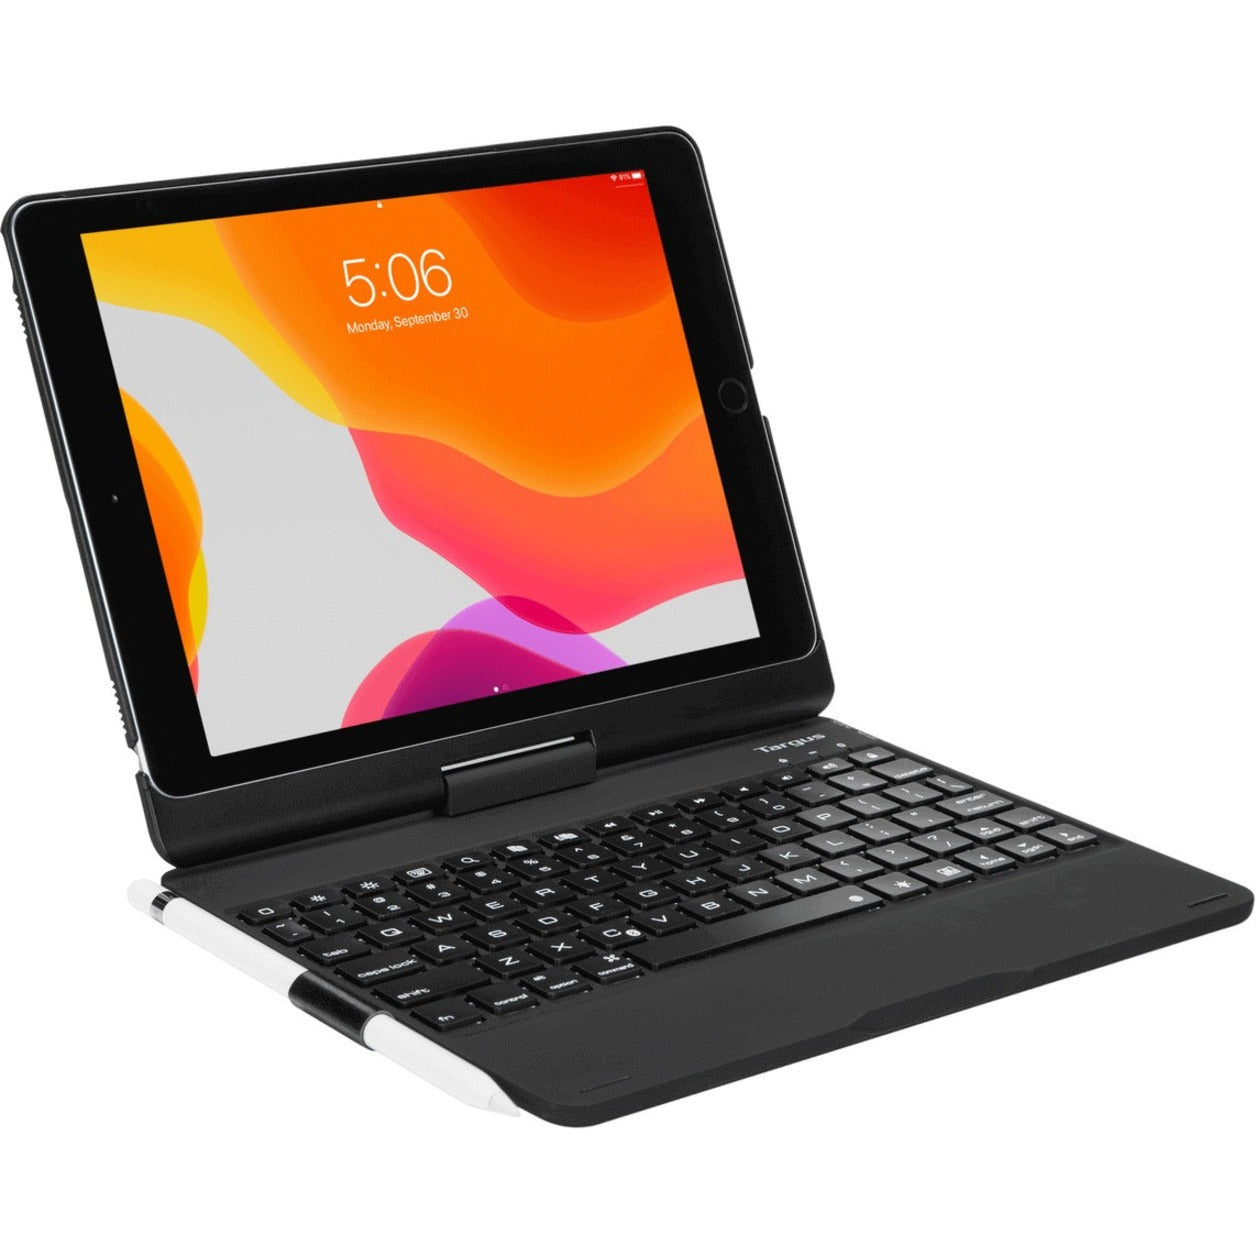 Targus THZ857US VersaType For iPad (7th Gen.) 10.2-inch, iPad Air 10.5-inch, iPad Pro 10.5-inch Keyboard/Cover Case